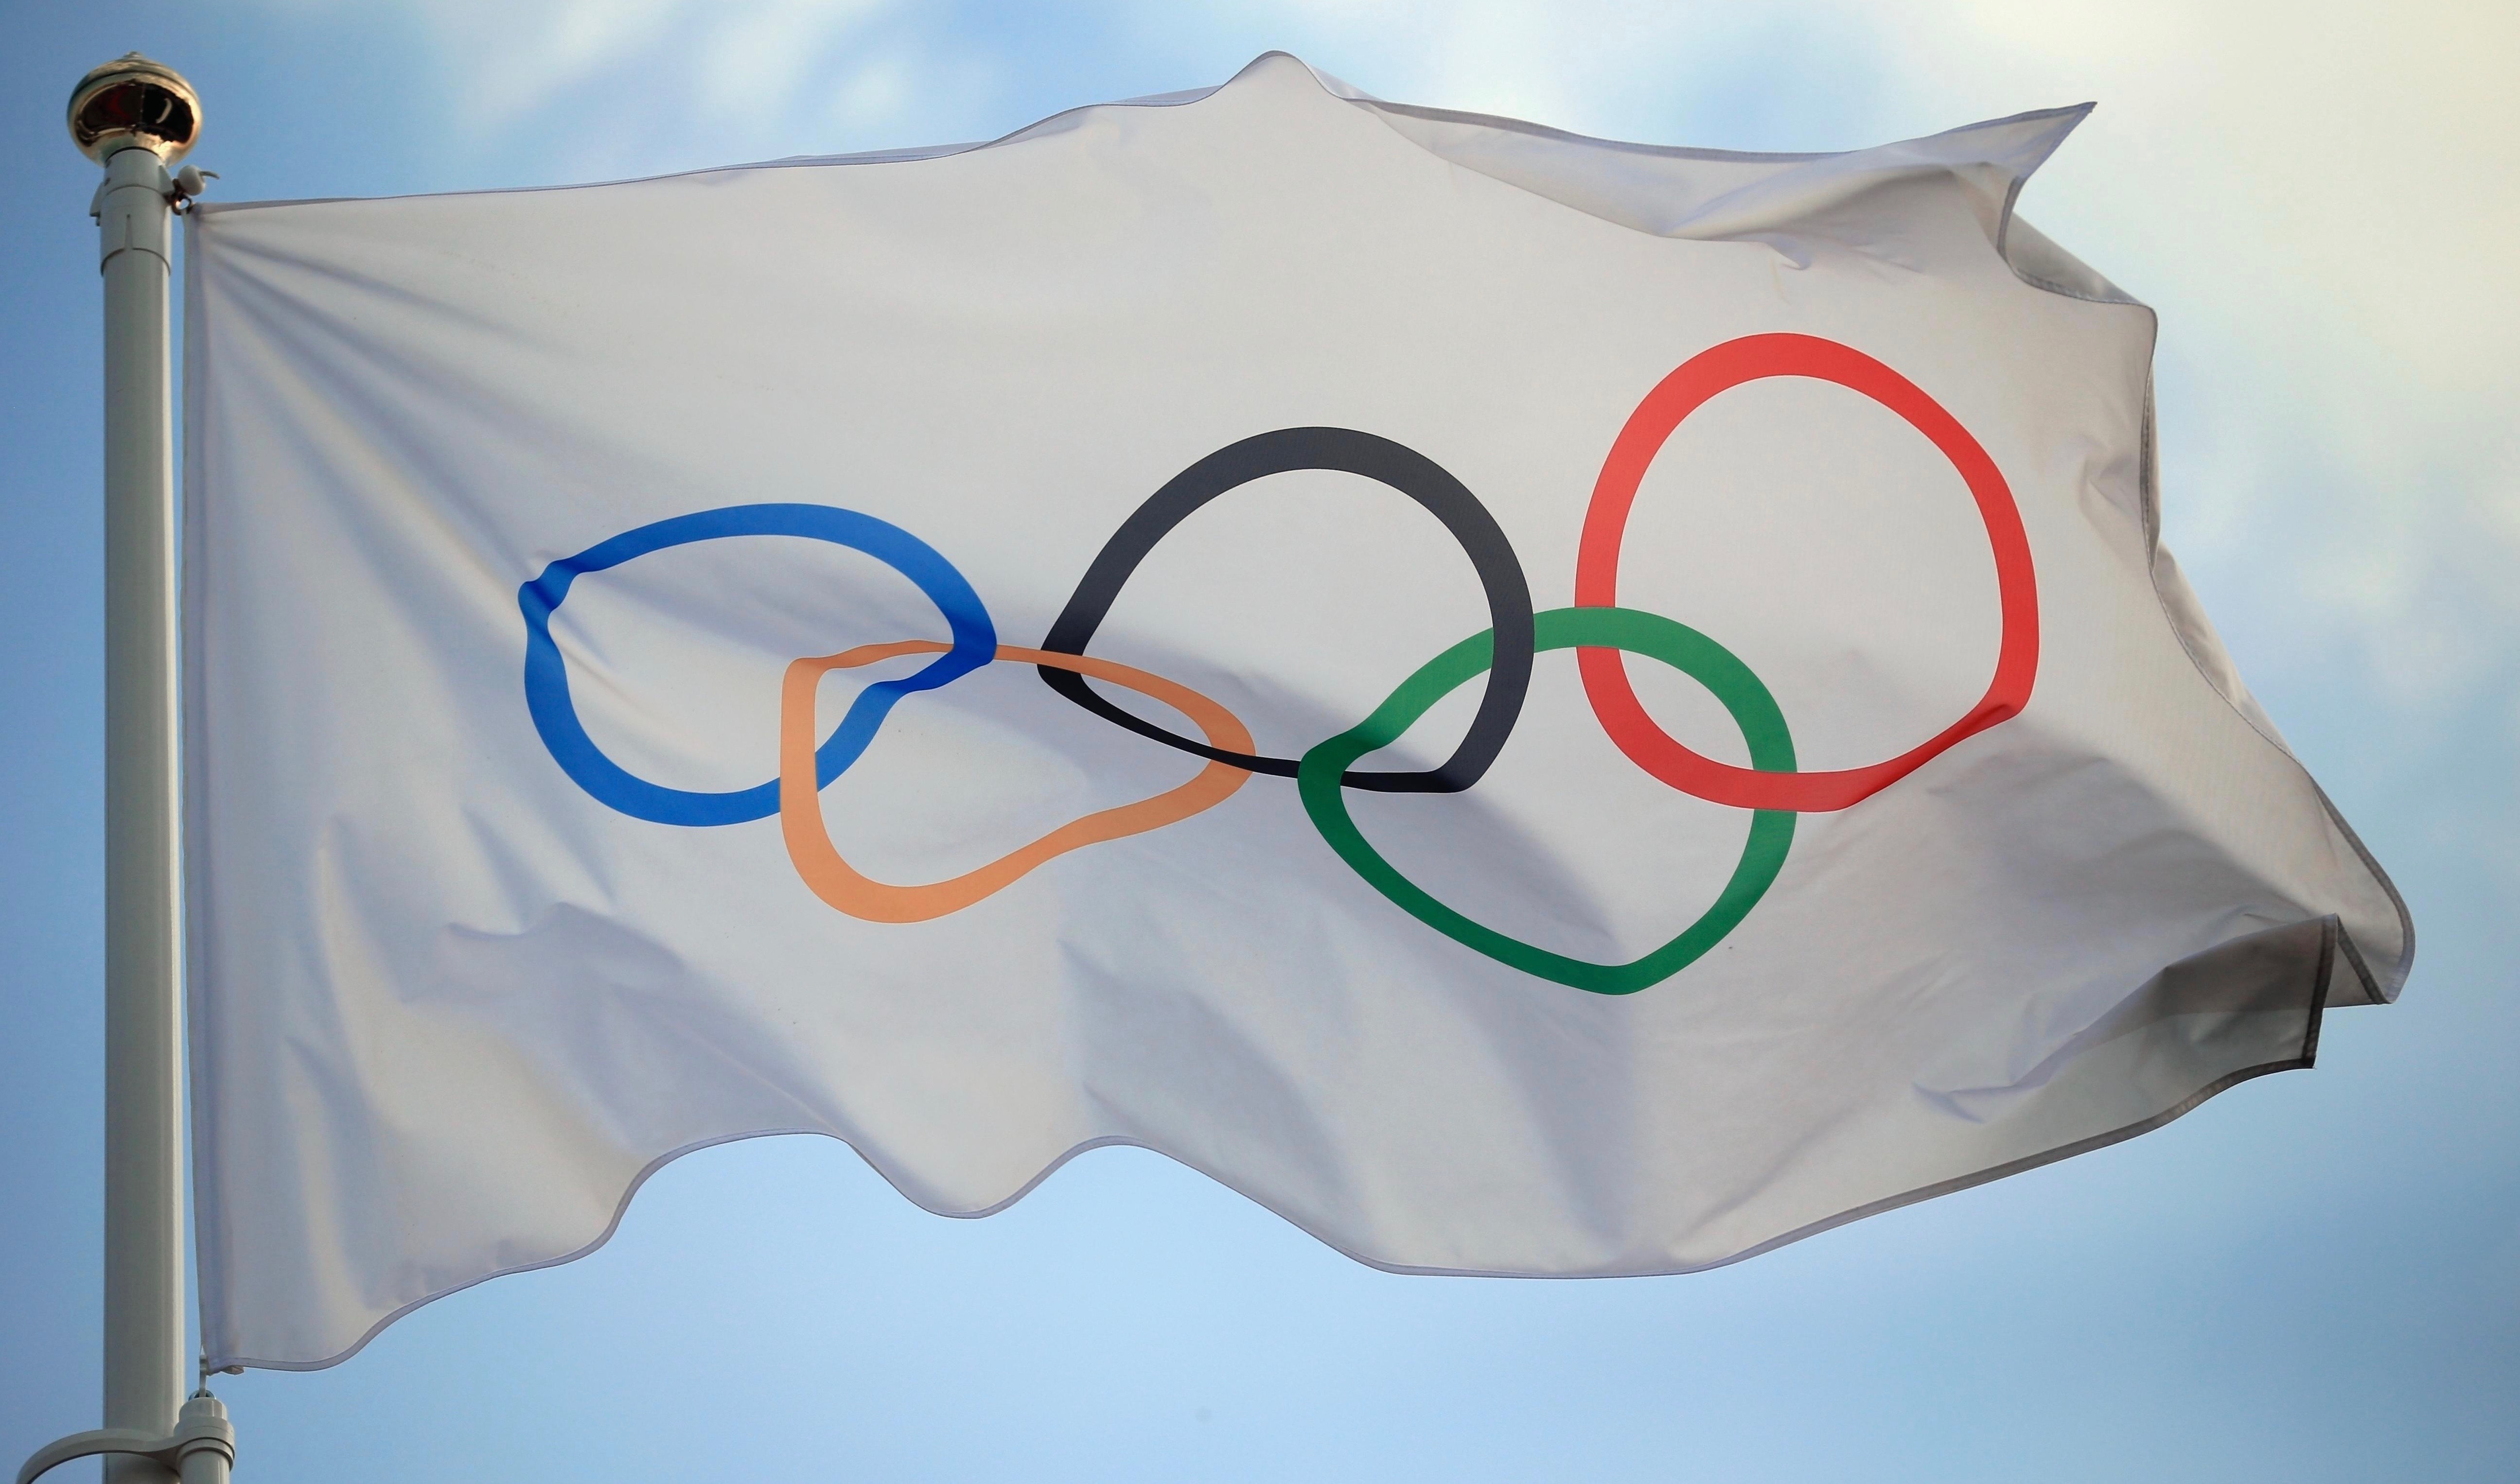 London 2012 OG, Olympic Village – The Olympic flag.